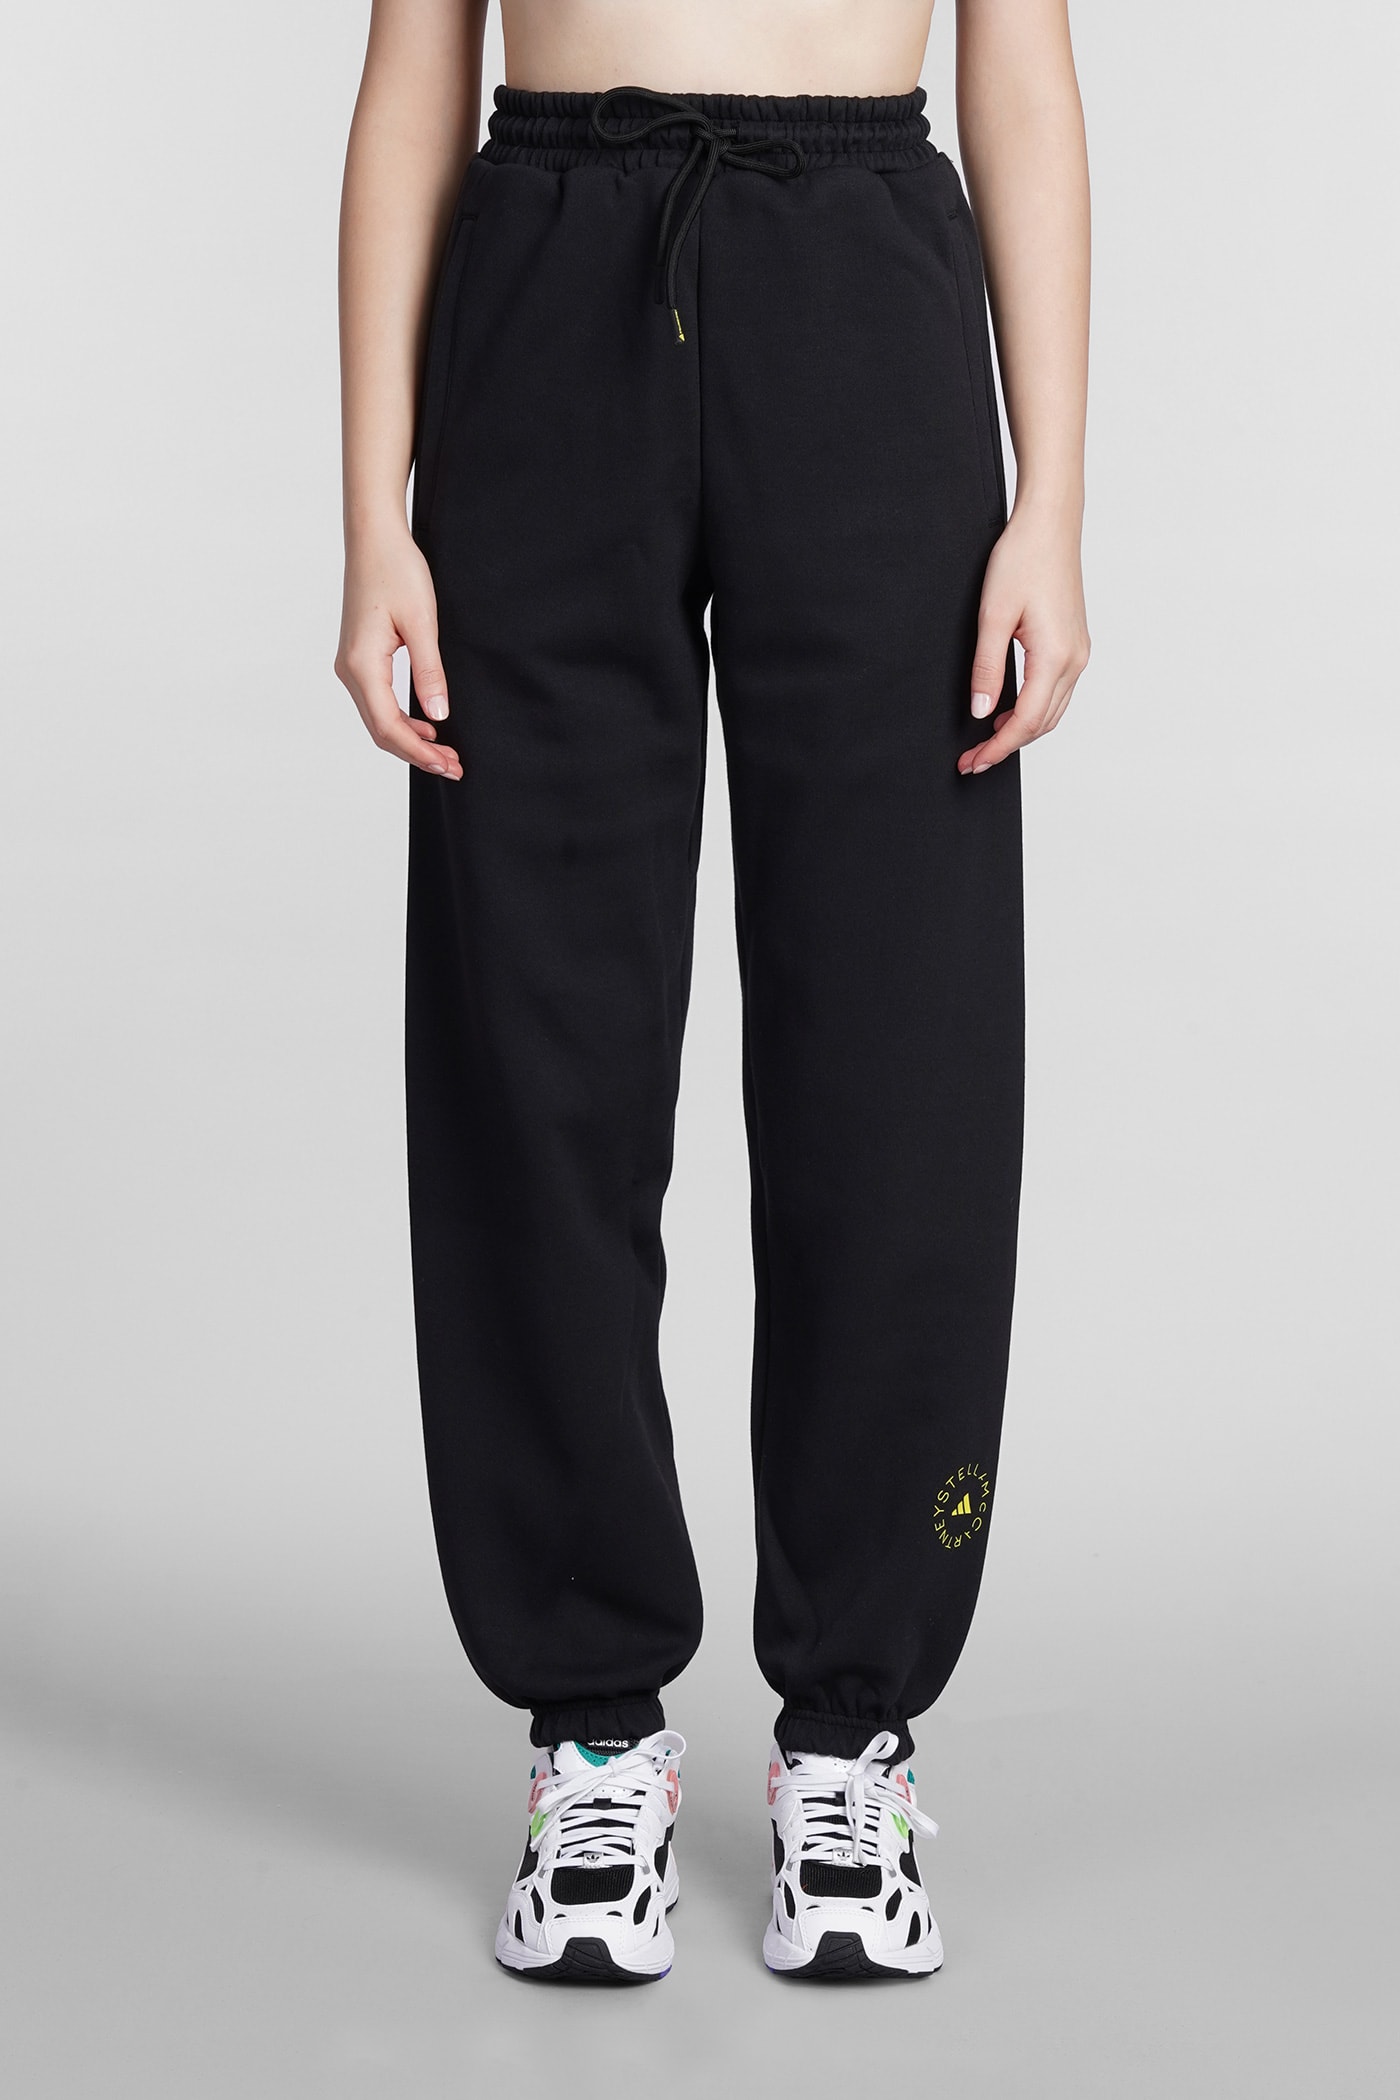 Adidas by Stella McCartney Pants In Black Synthetic Fibers